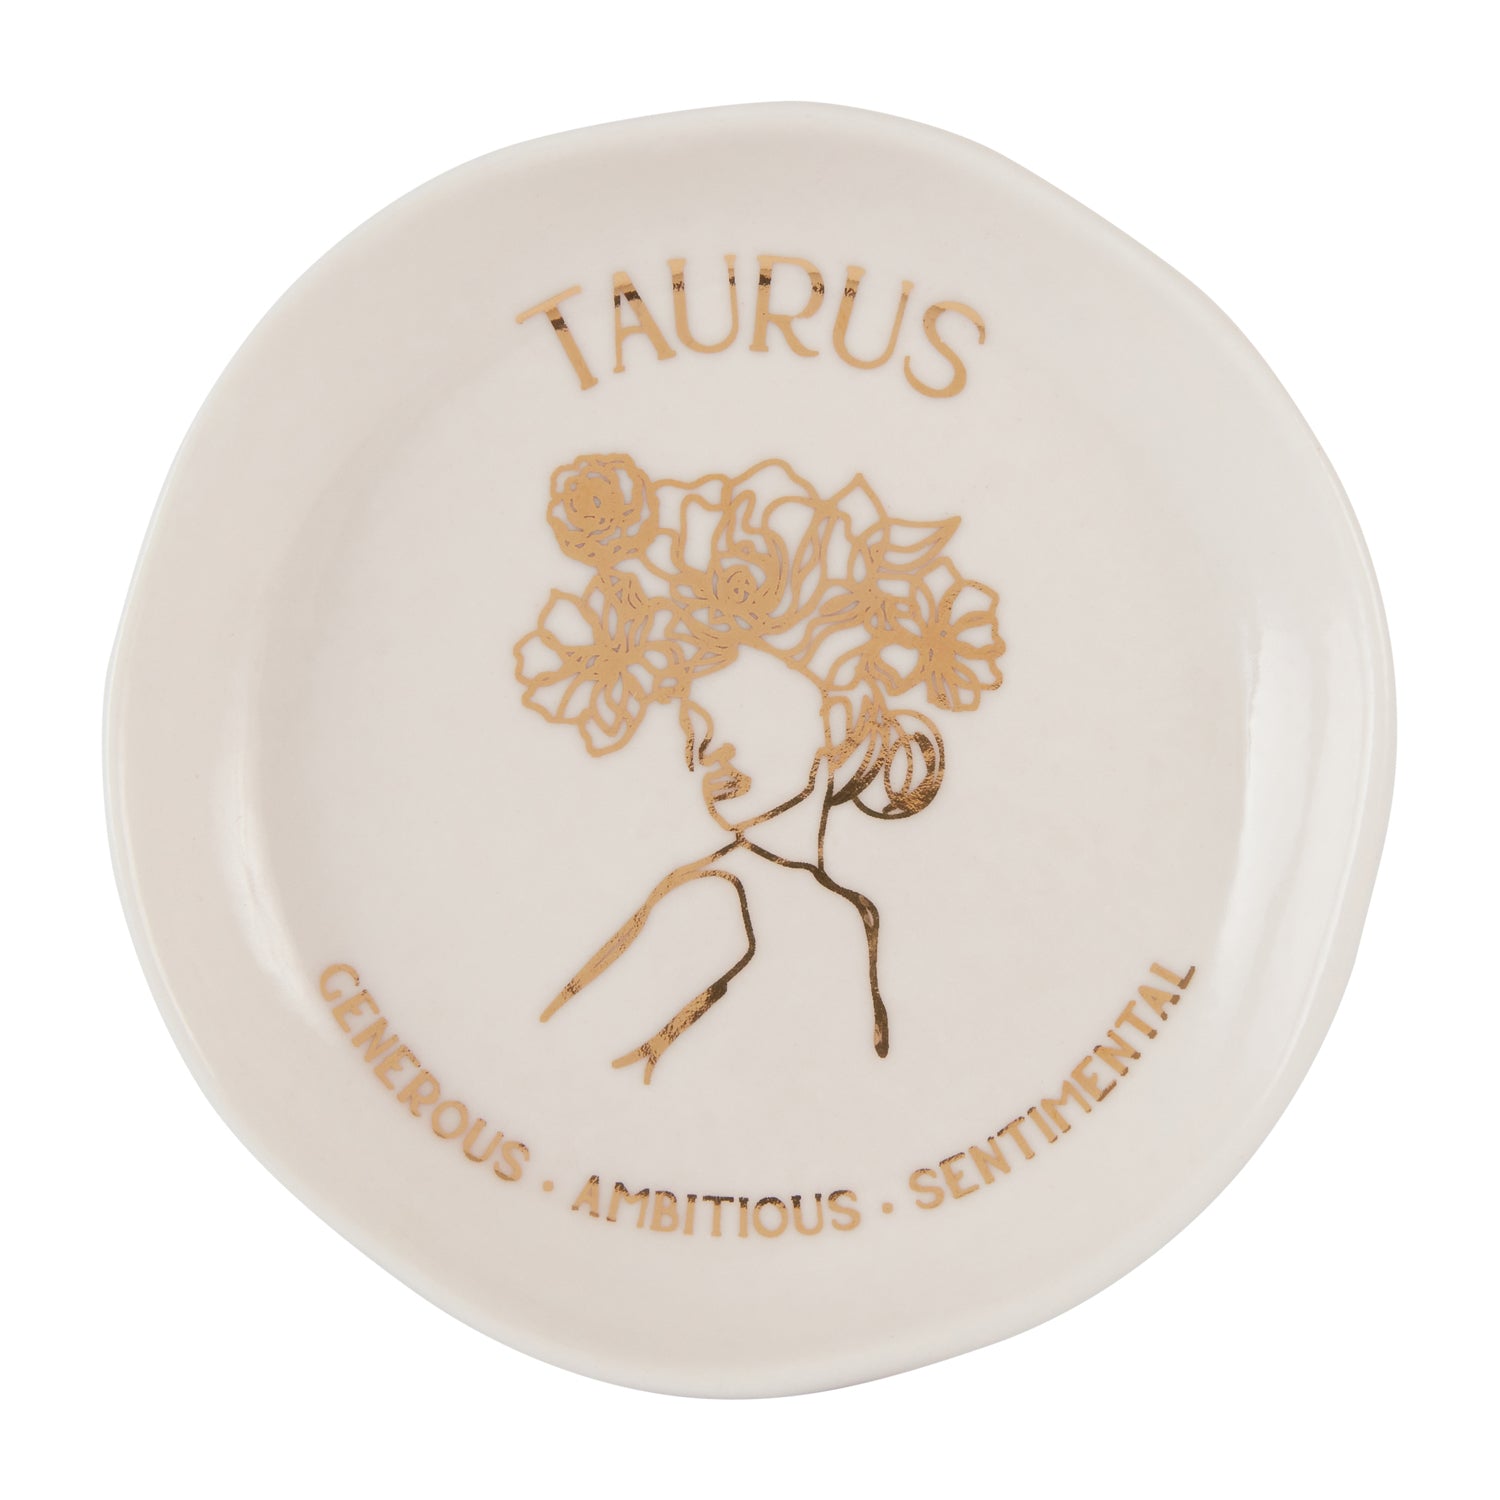 Taurus Trinket Dish _ Luna & Soul Australia